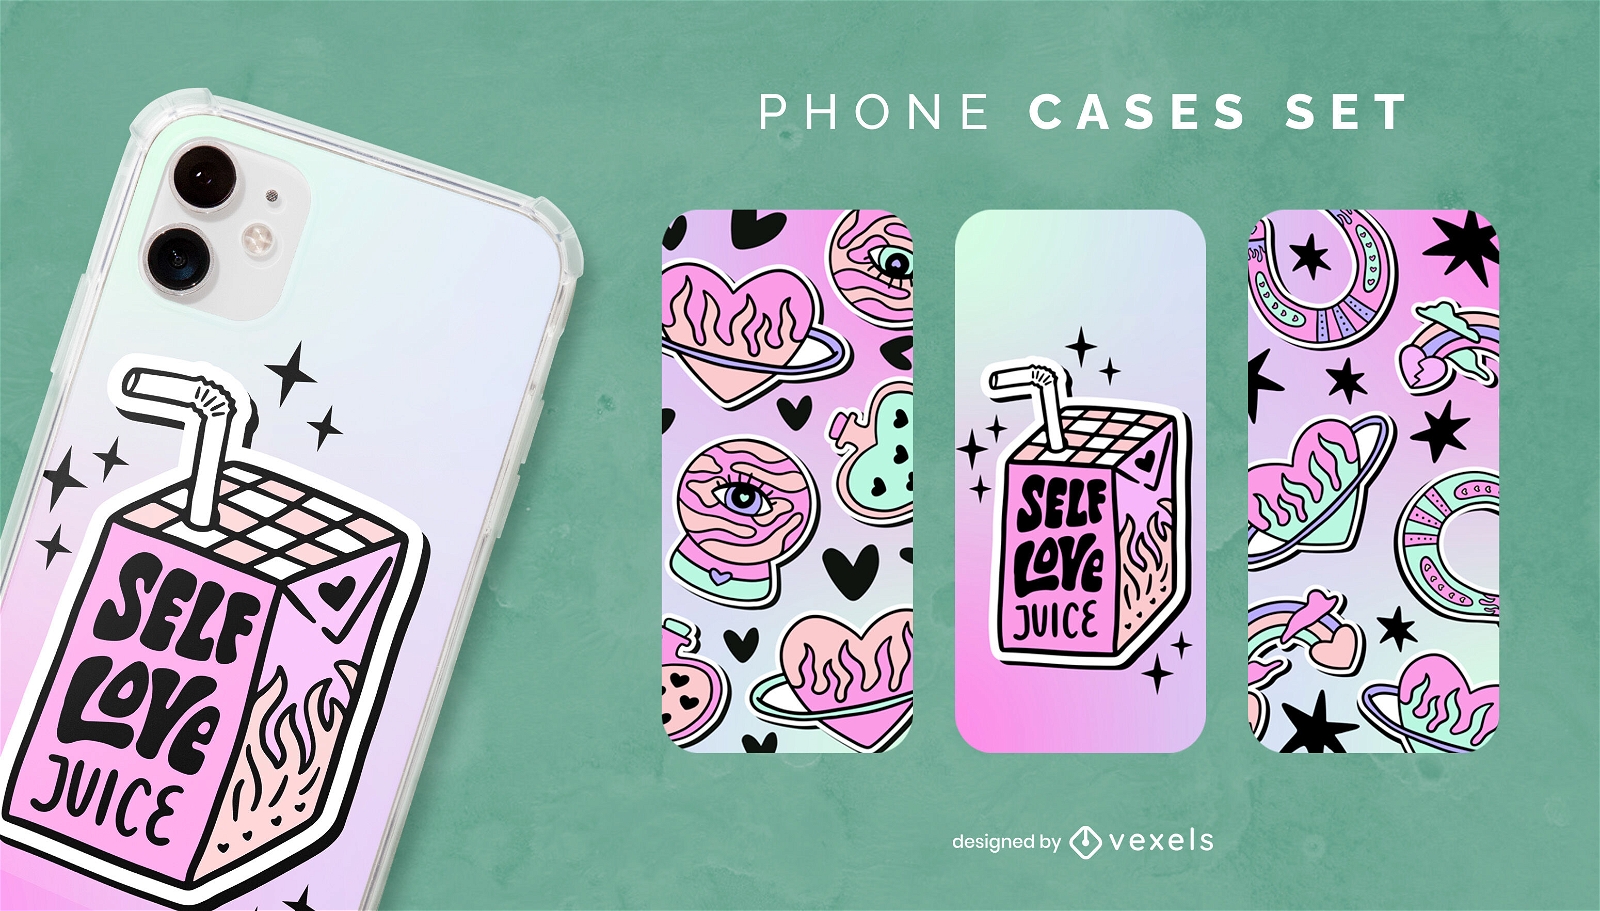 Quirky self-love phone cases set design